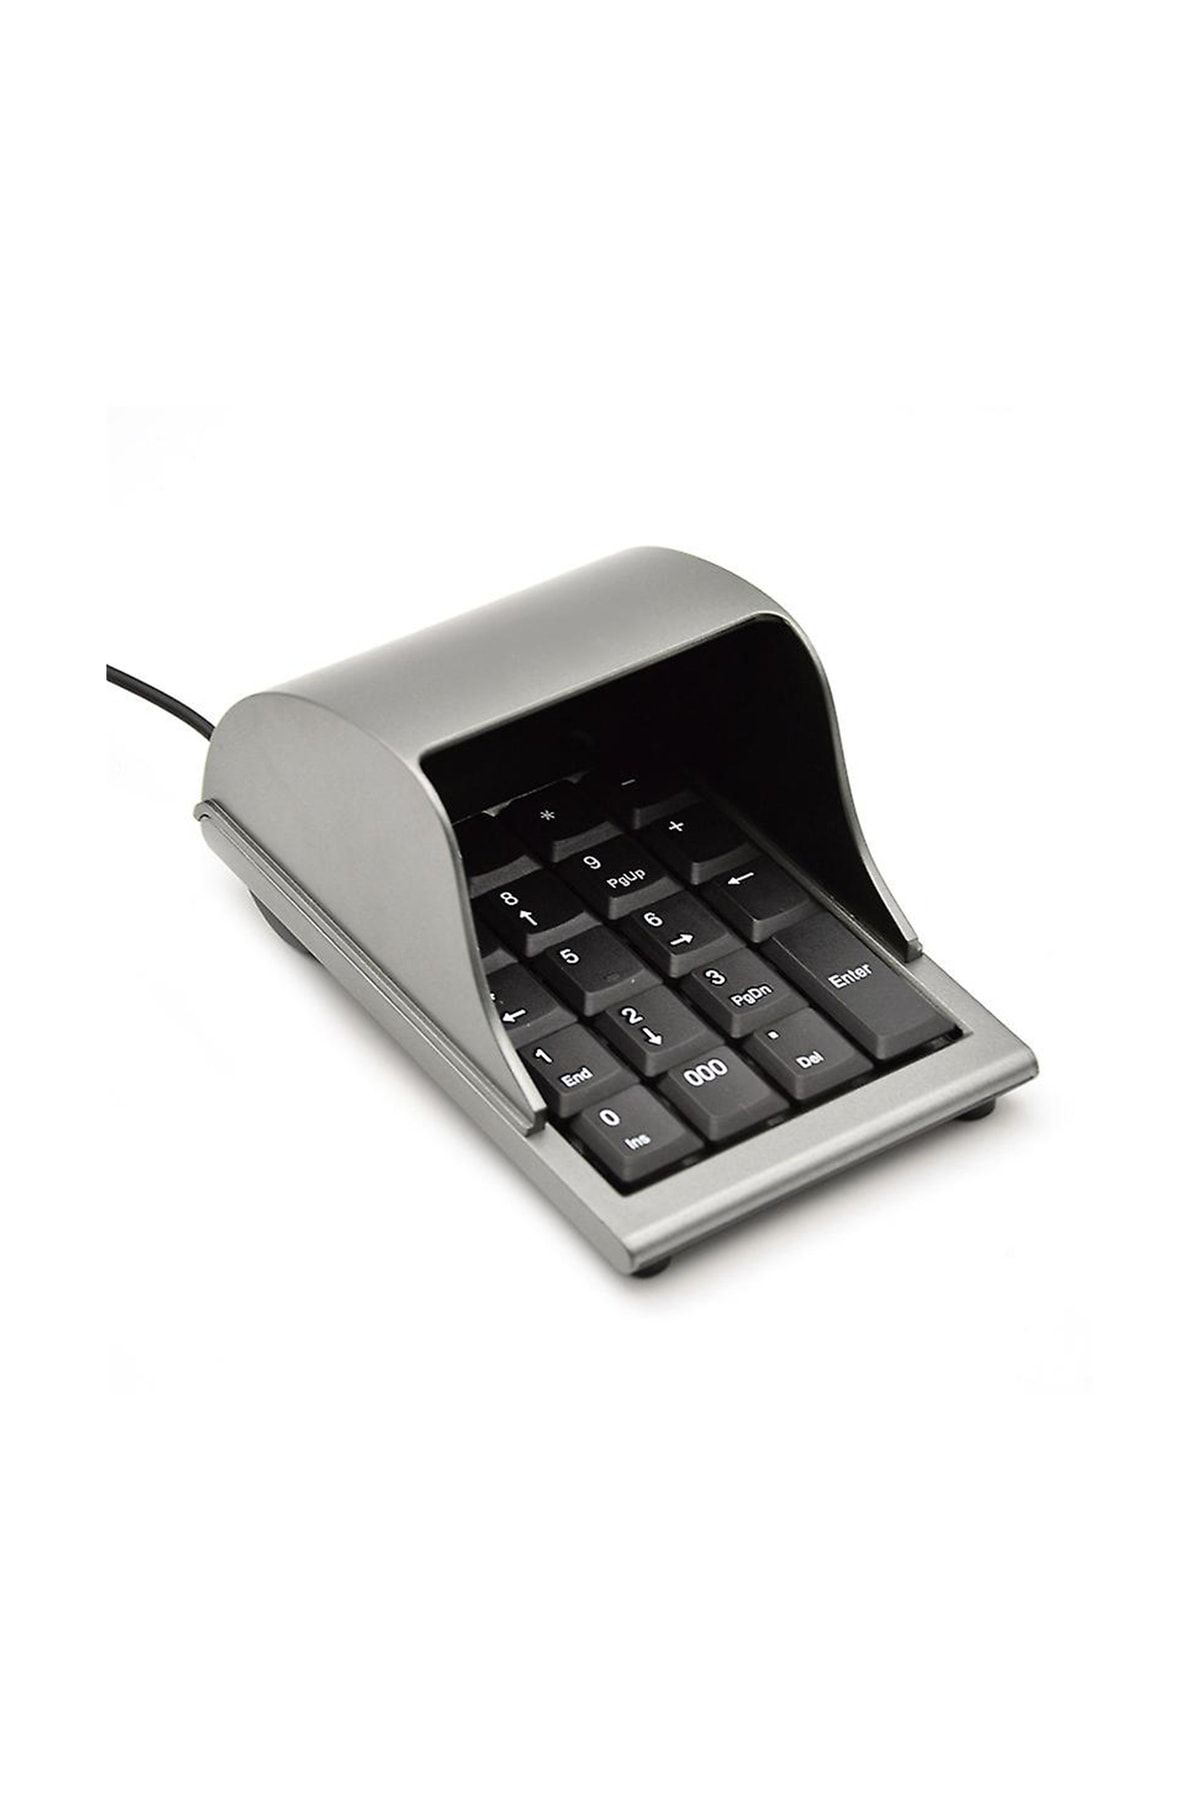 Microcase Parmak Gizlemeli Numlock Numerik Klavye Keypad Usb Kablolu - Al3776